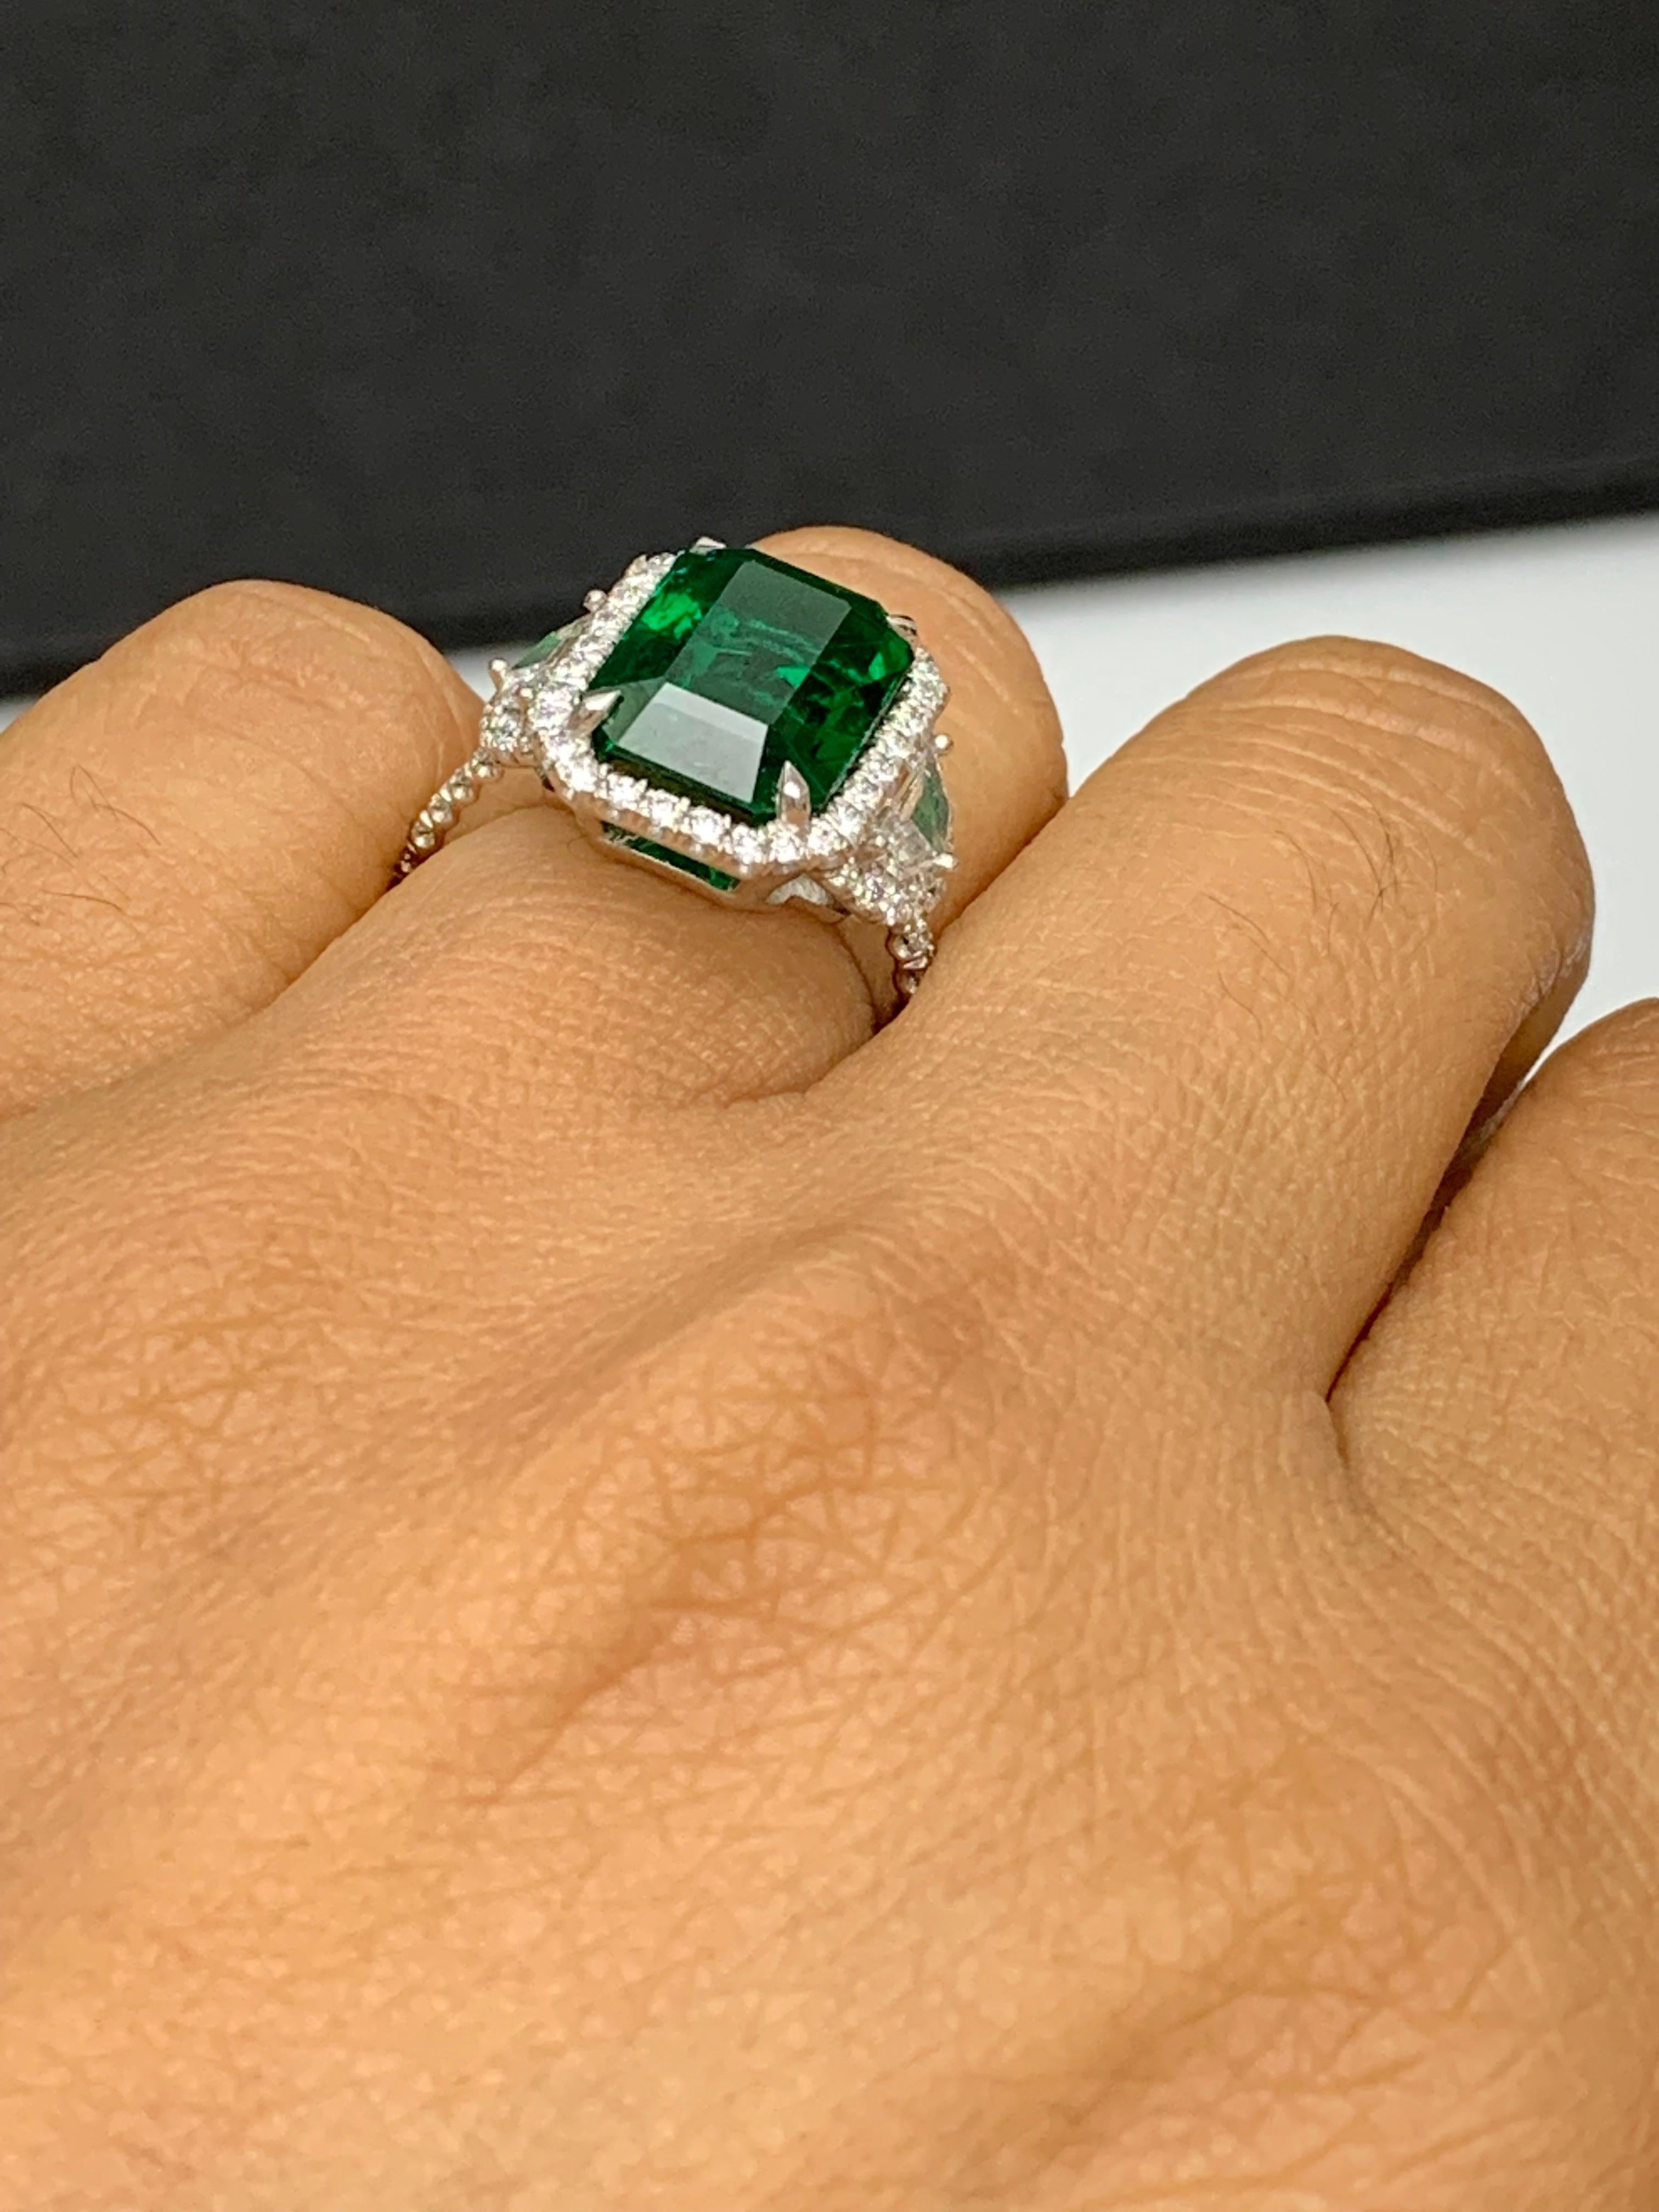 GIA Certified 4.07 Carat Emerald Cut Emerald Diamond 3 Stone Ring in Platinum For Sale 6